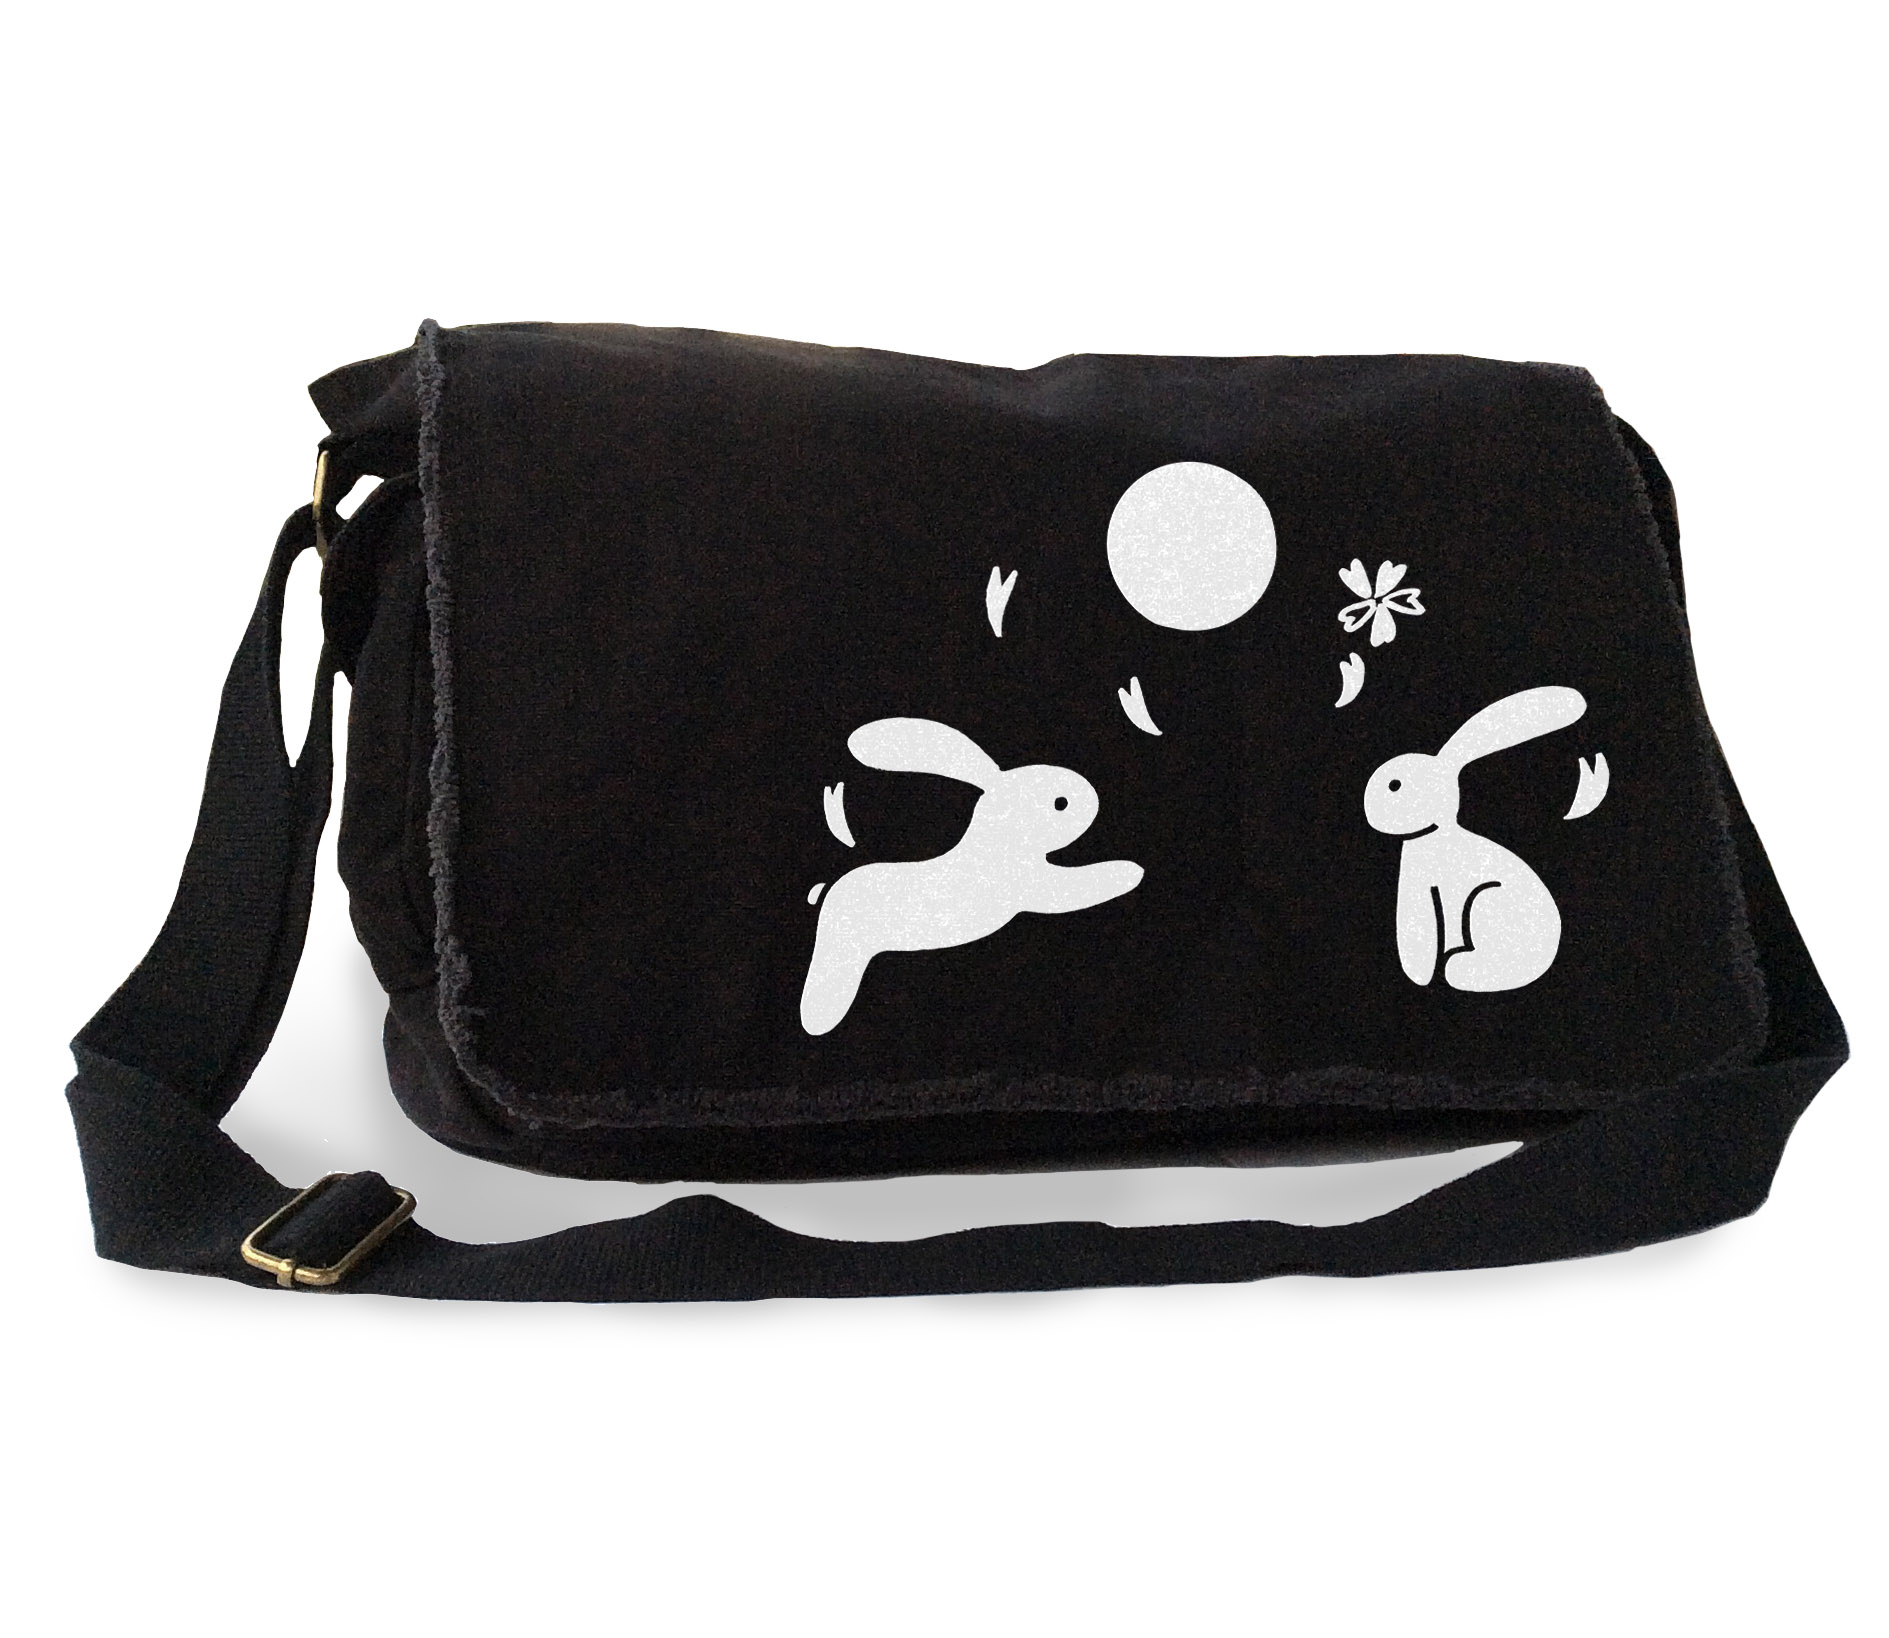 Asian Moon Bunnies Messenger Bag - Black